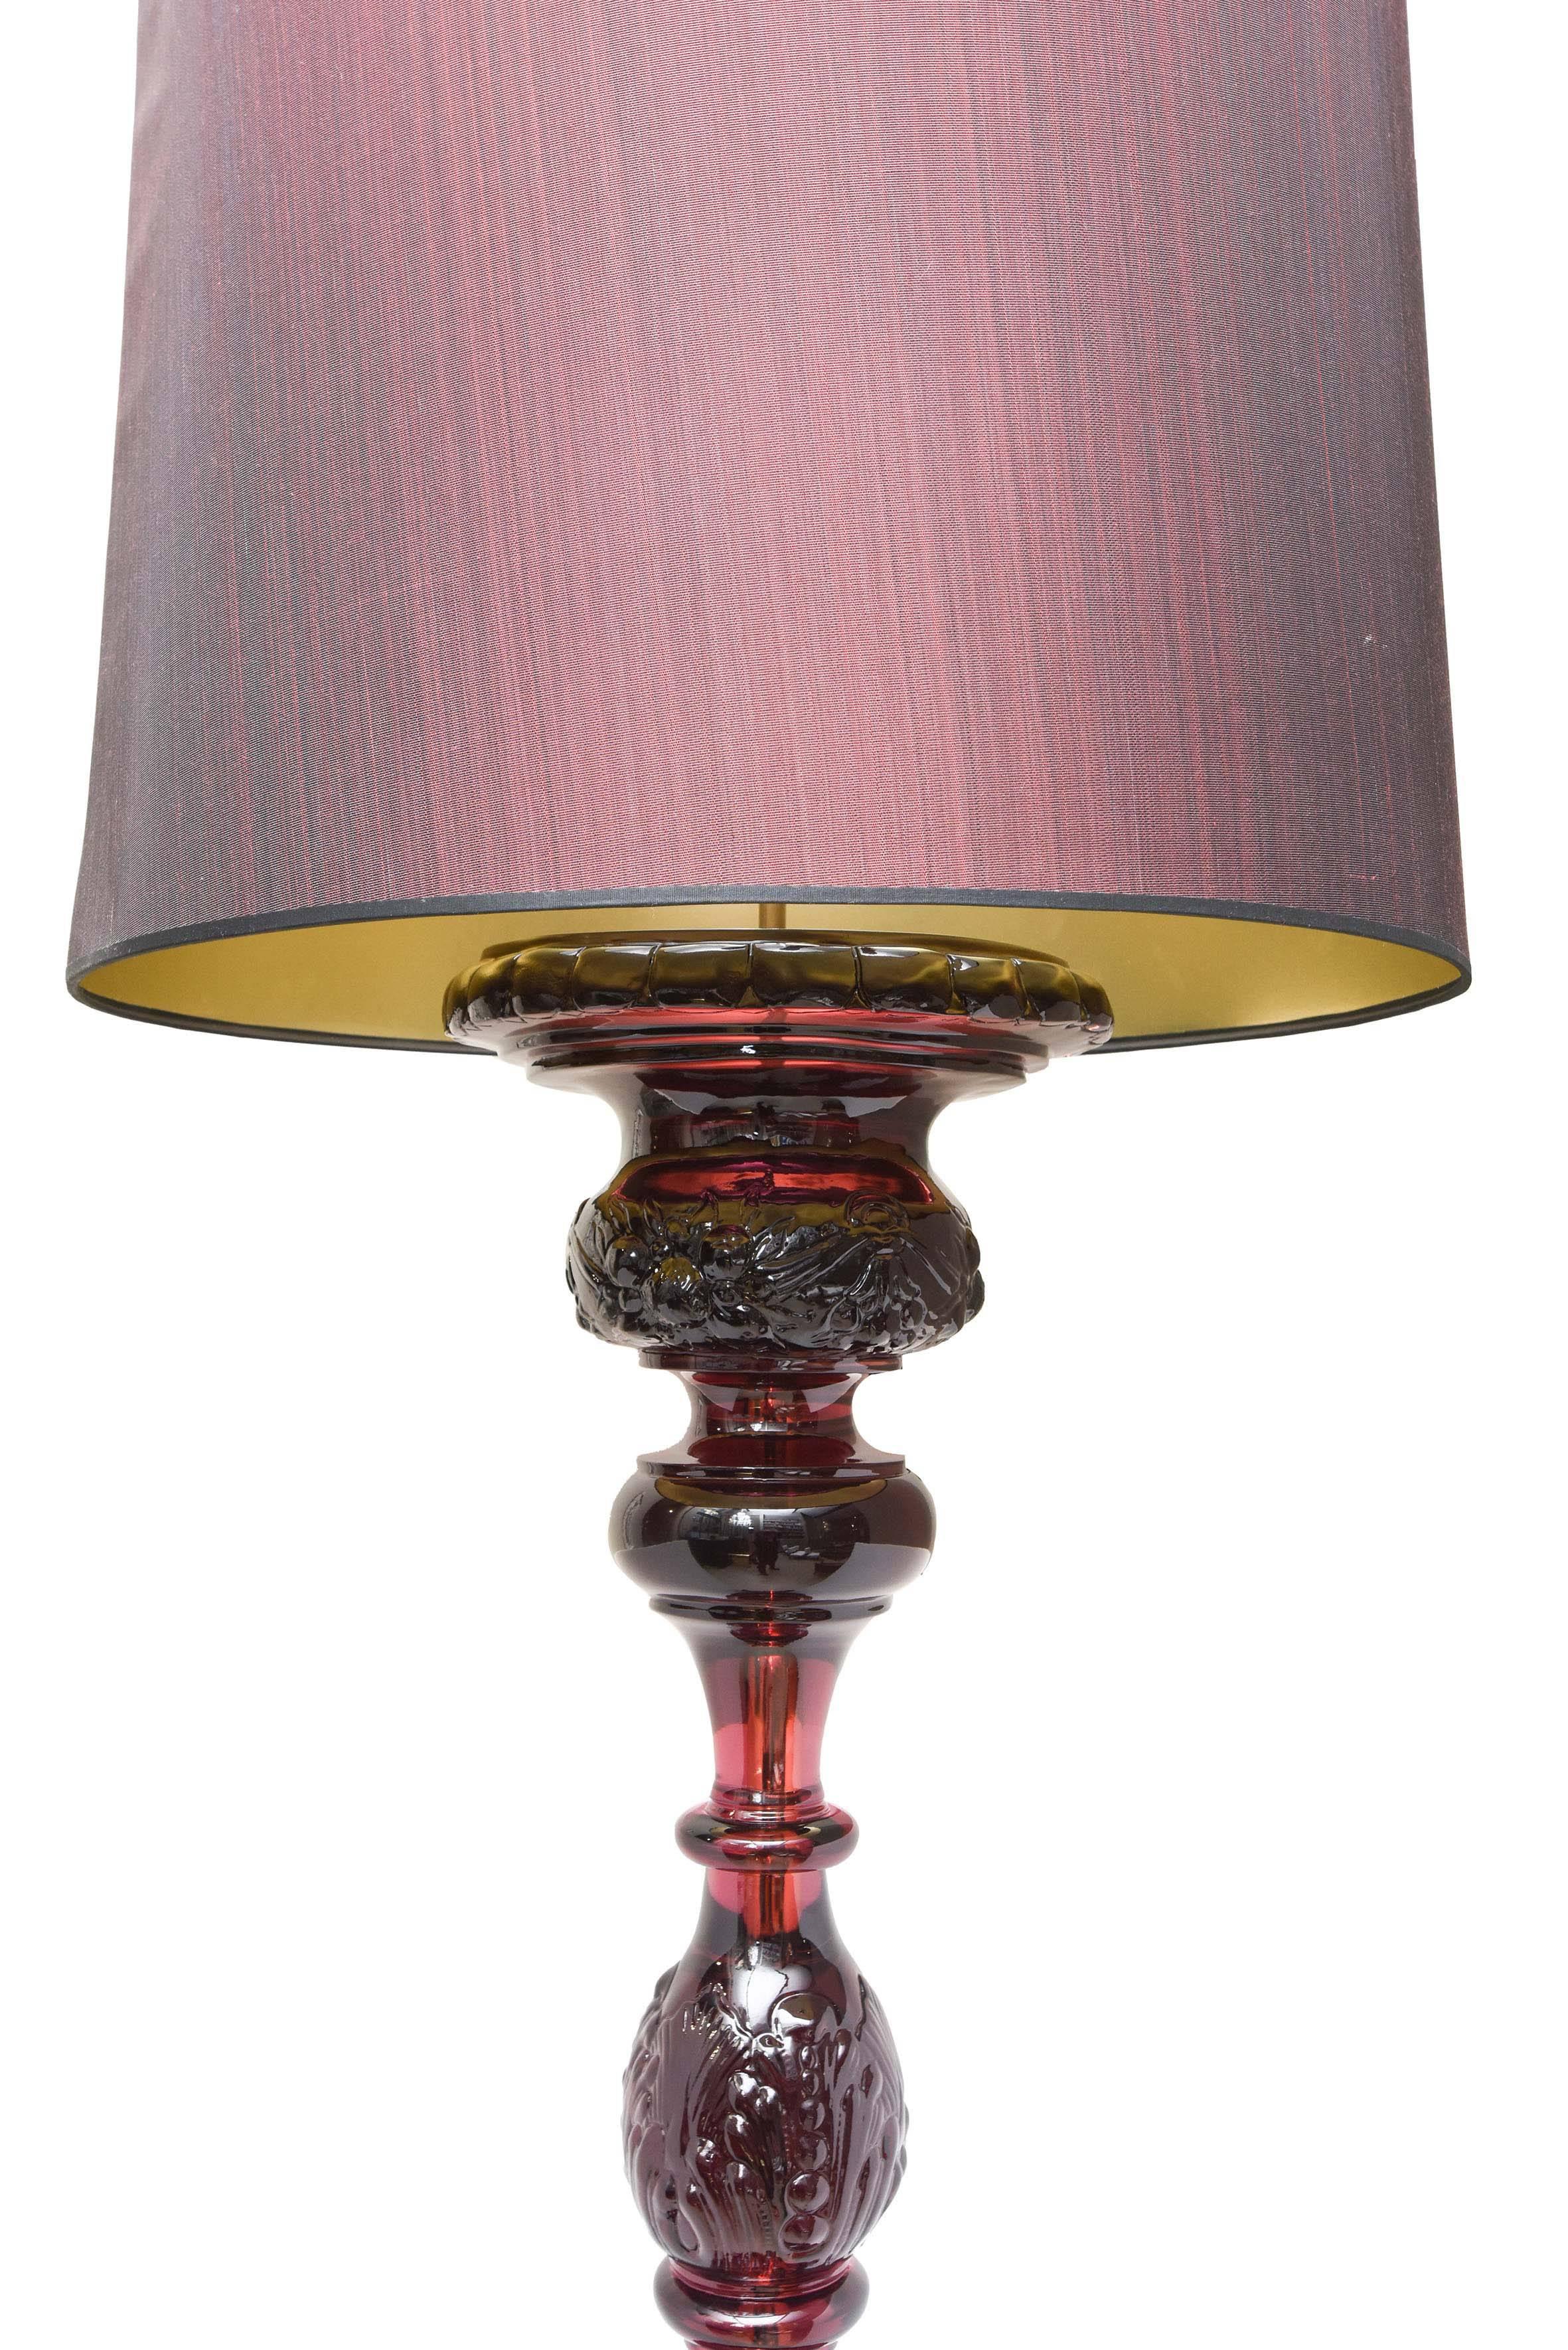 marianna kennedy lamp